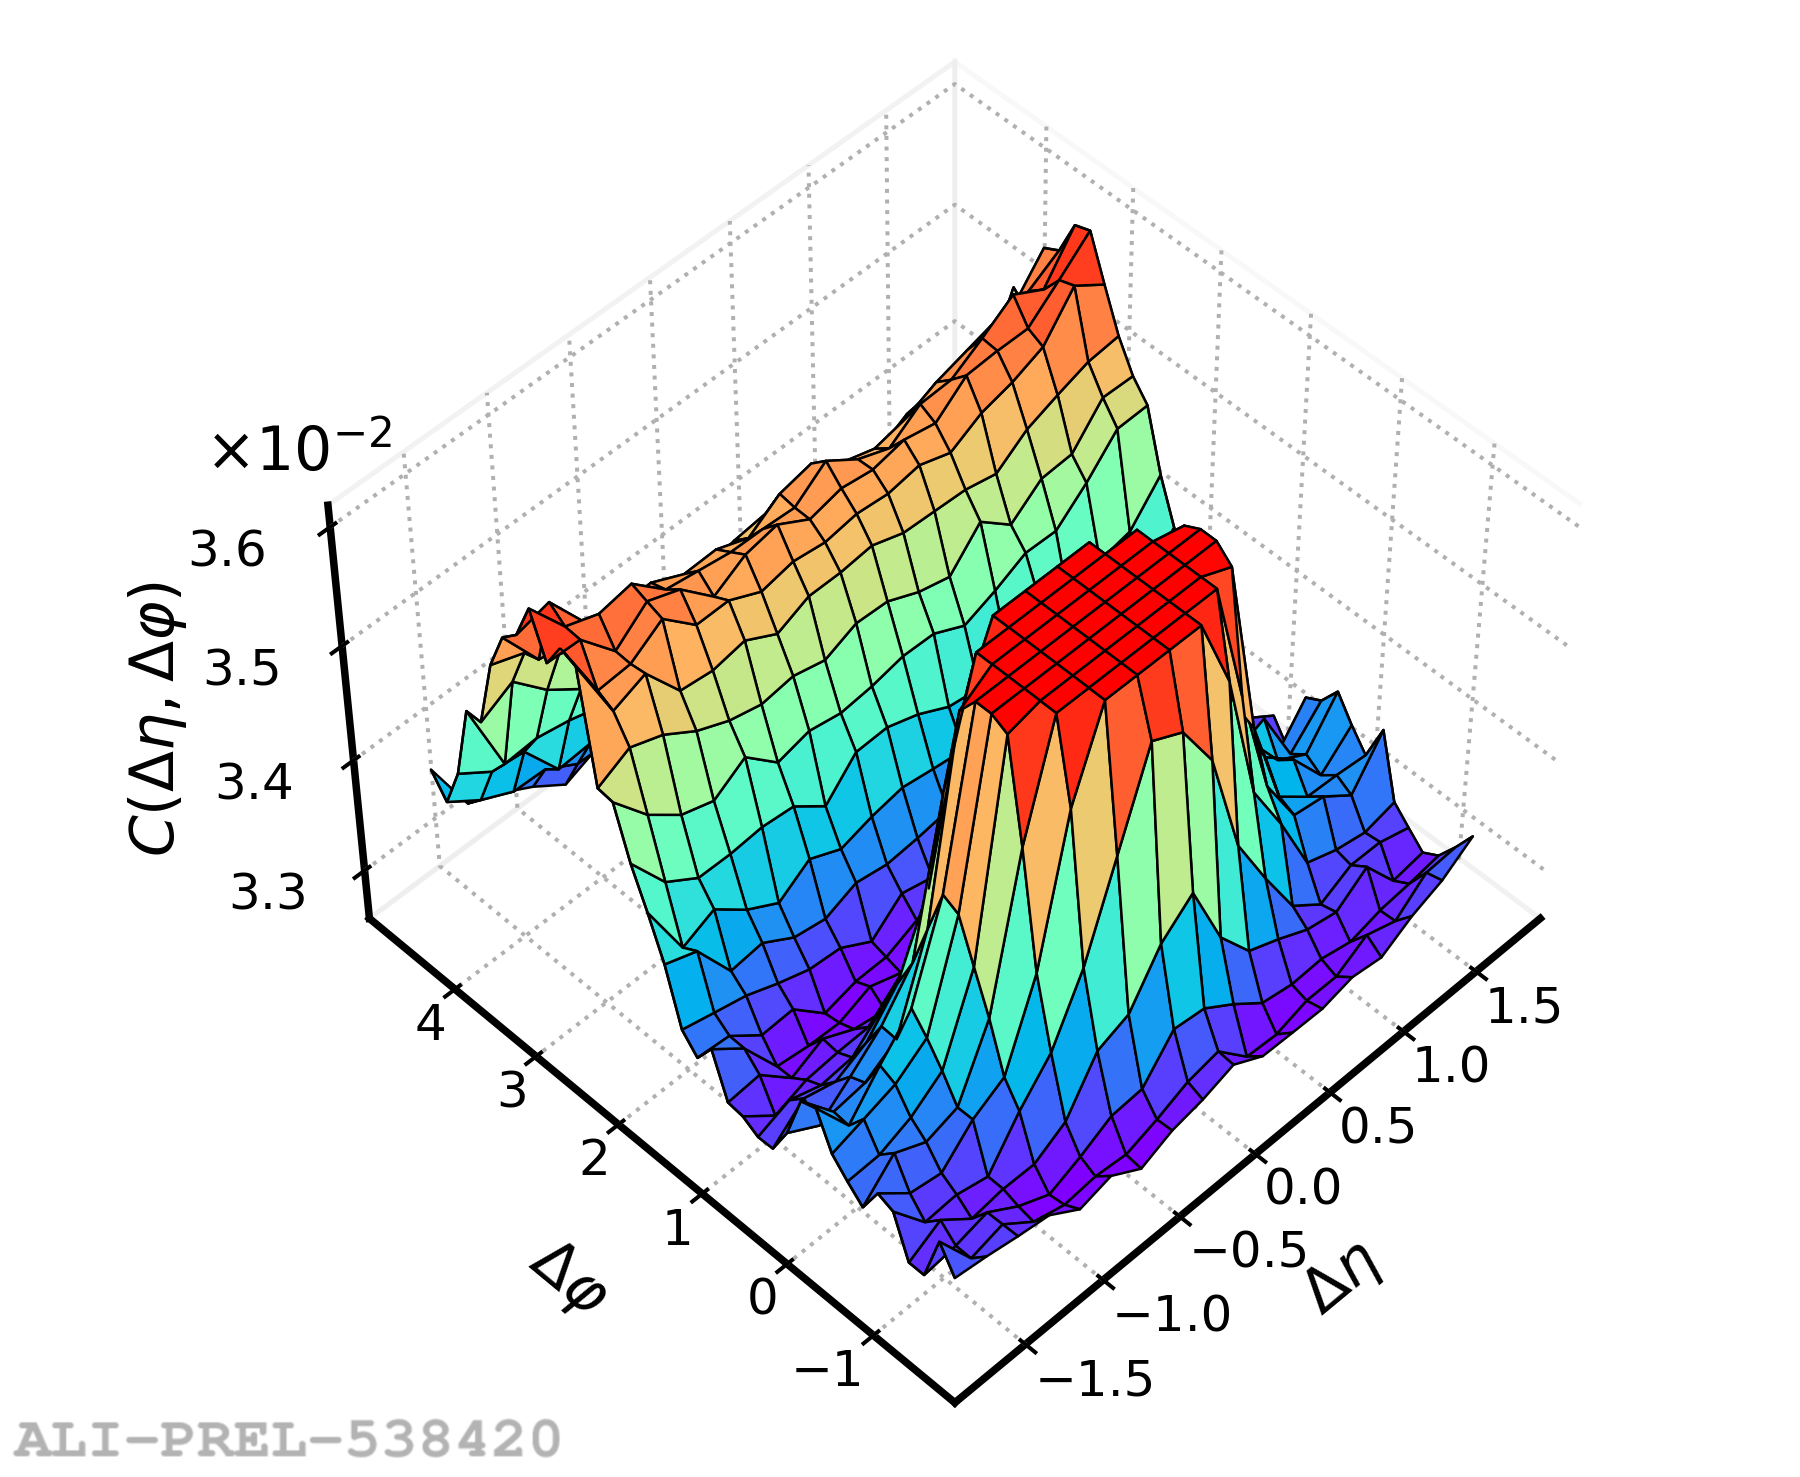 3D plot showing ridge-like structure